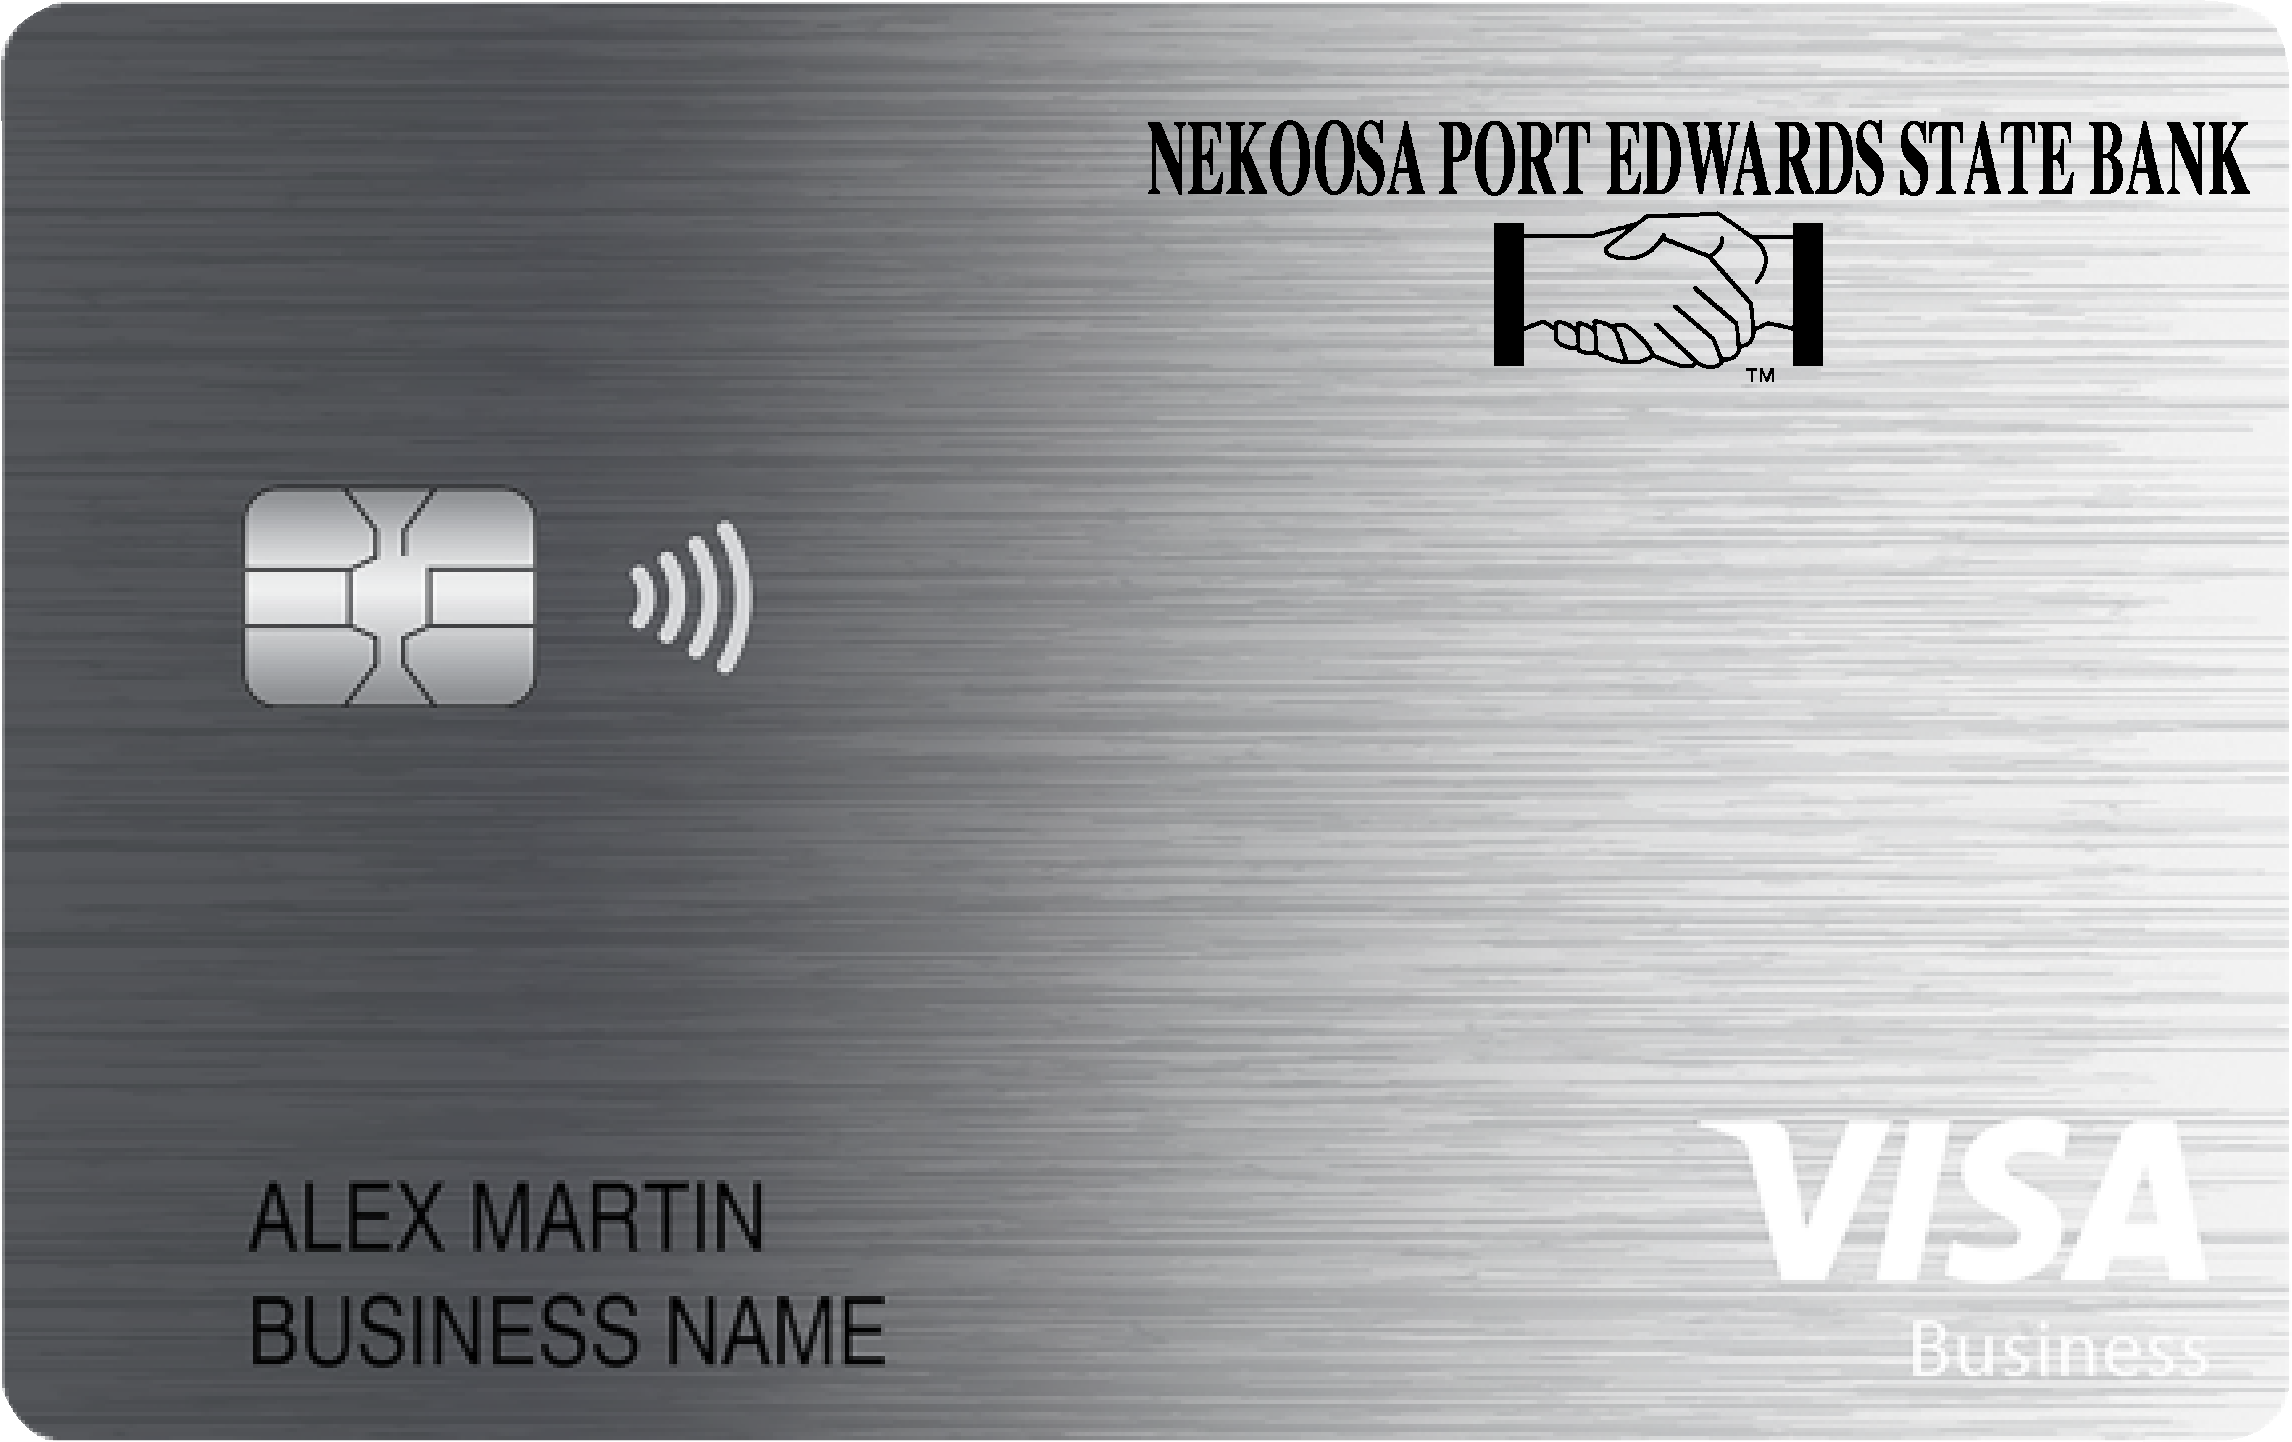 Nekoosa Port Edwards State Bank Business Cash Preferred Card